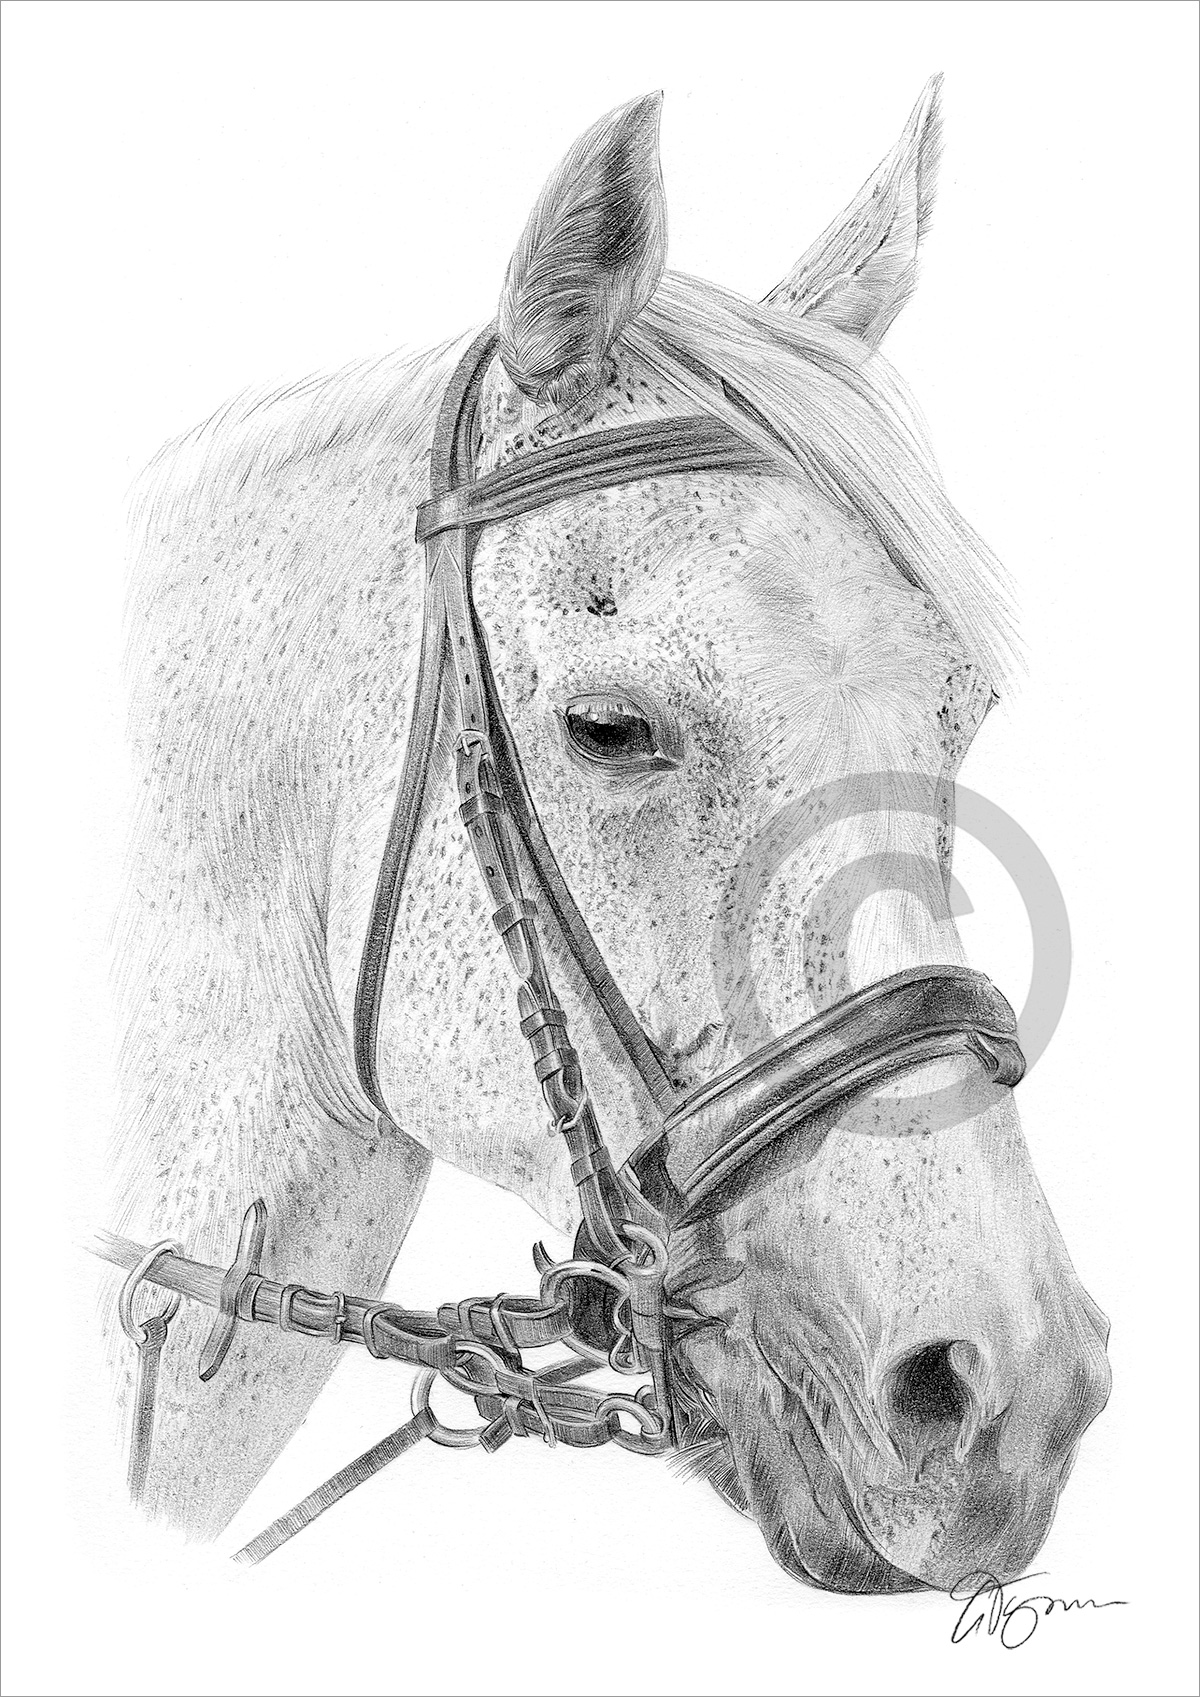 2246 Horse Profile Sketch Images Stock Photos  Vectors  Shutterstock